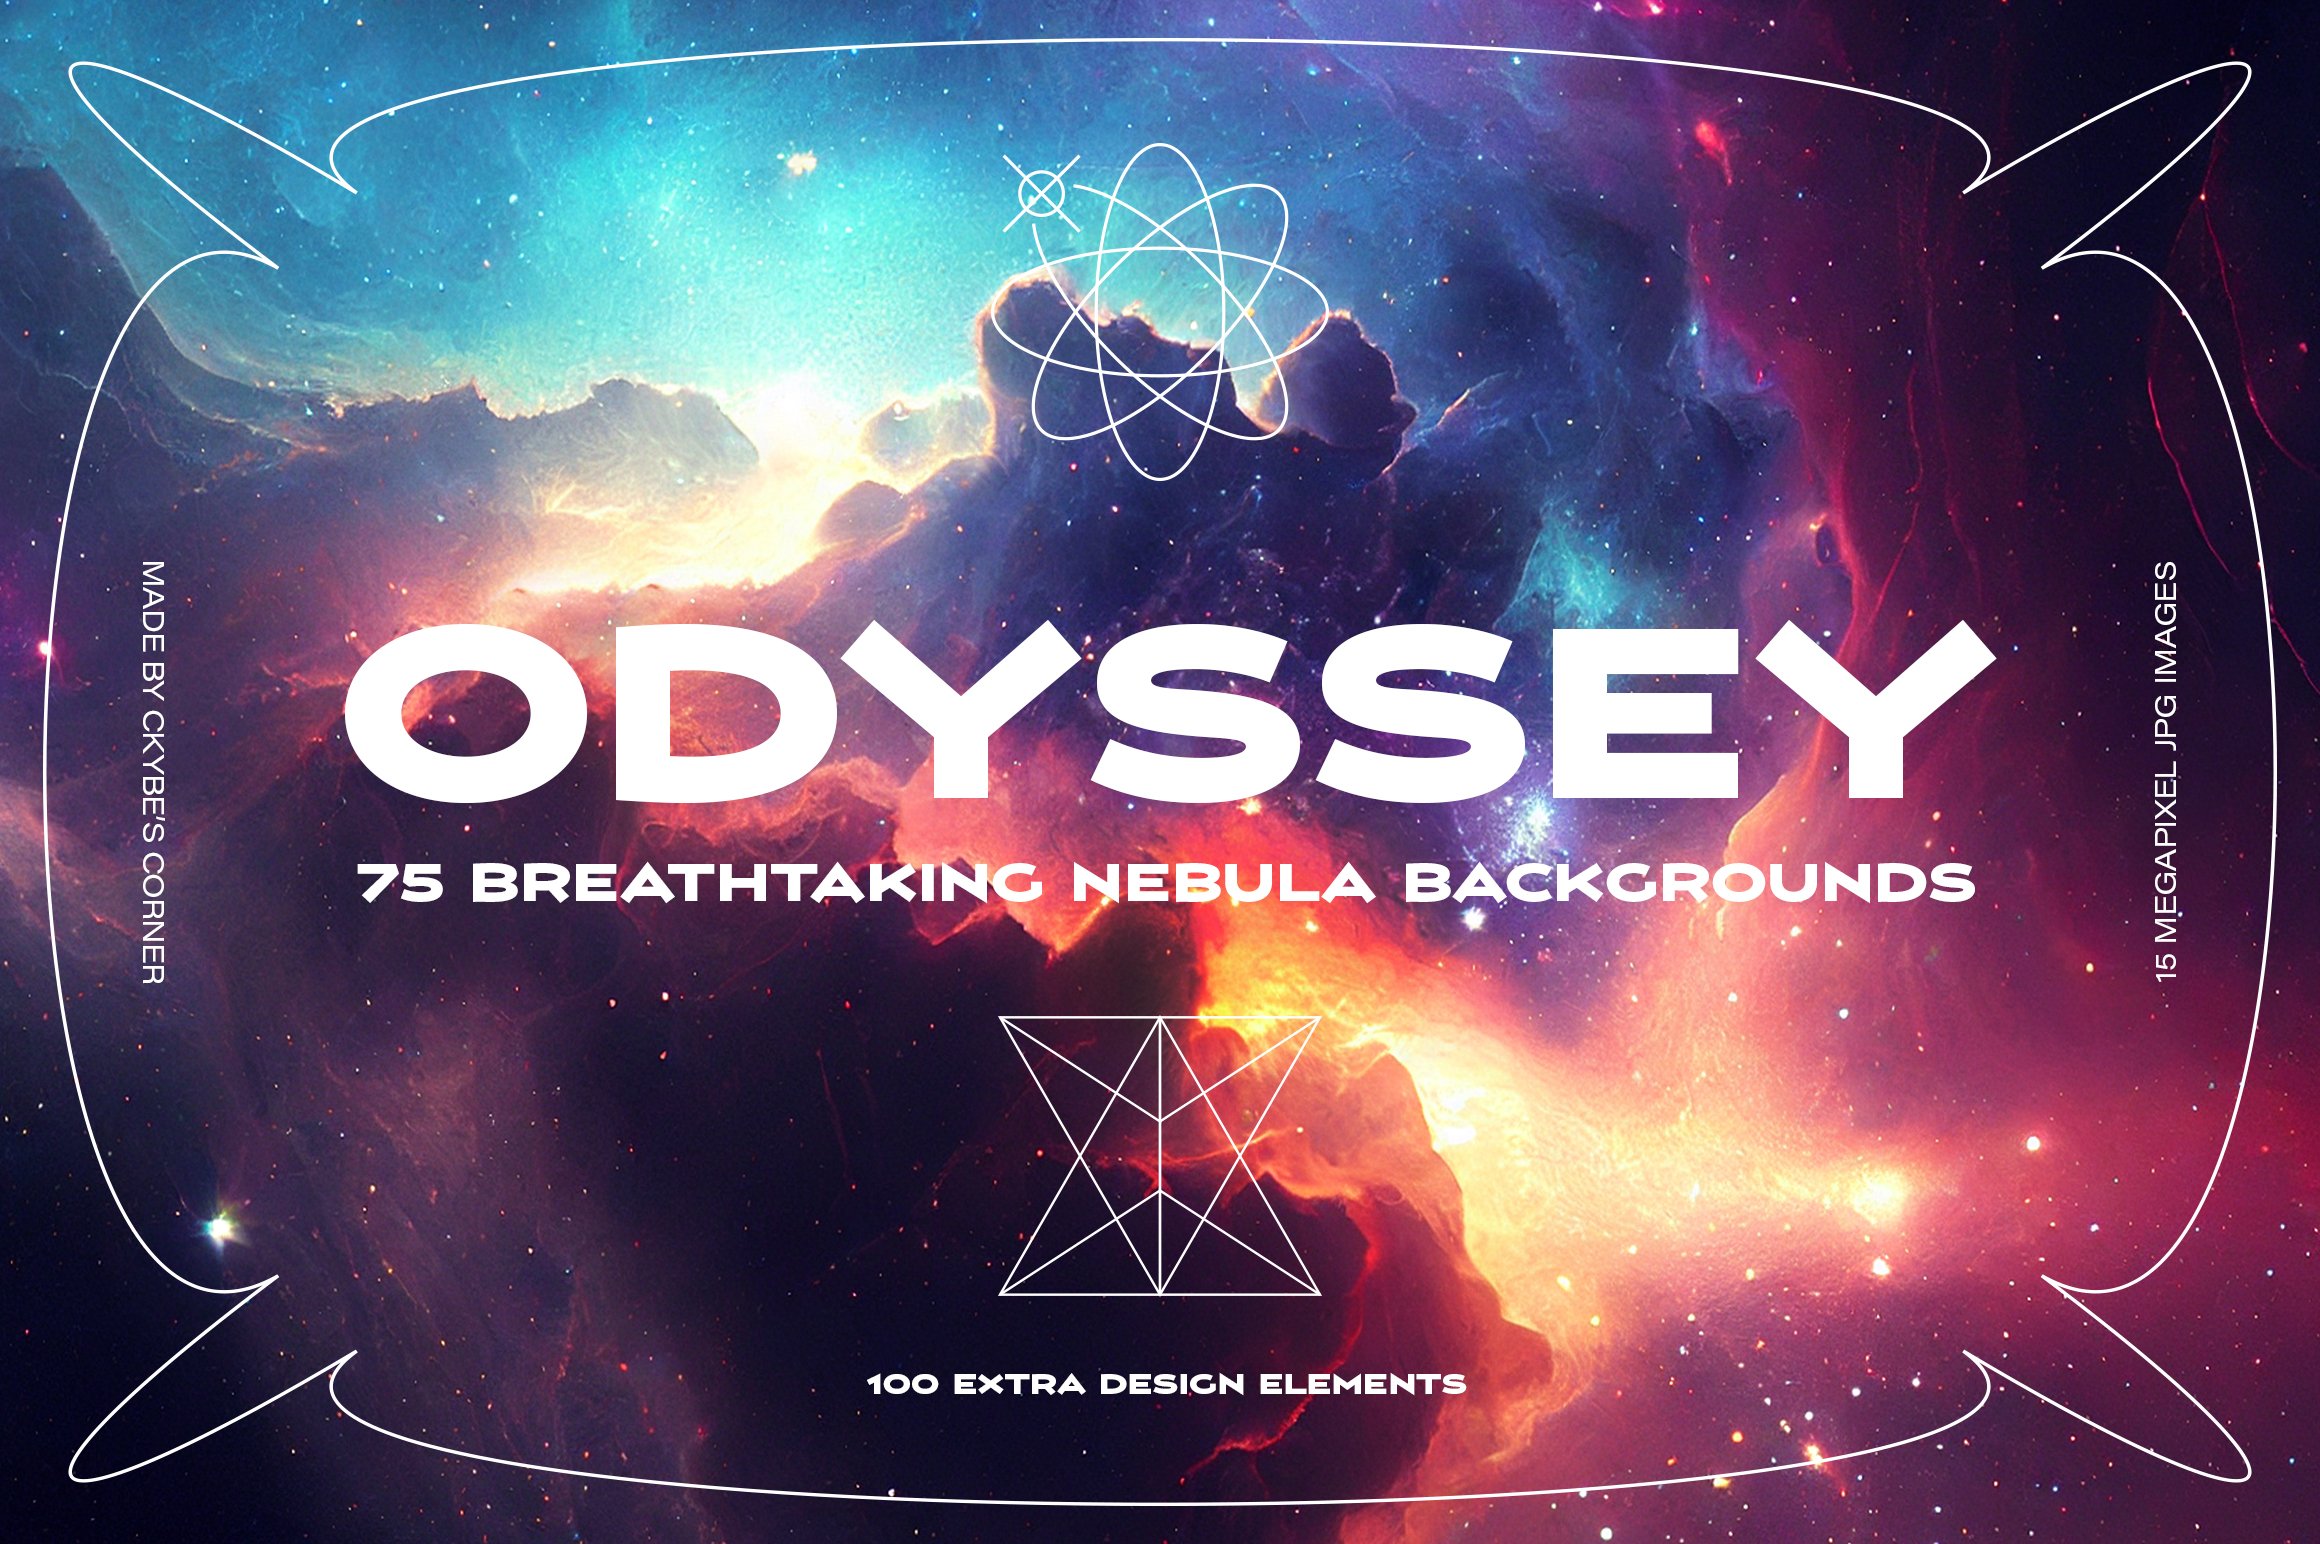 Odyssey | Nebula Backgrounds, Extras cover image.